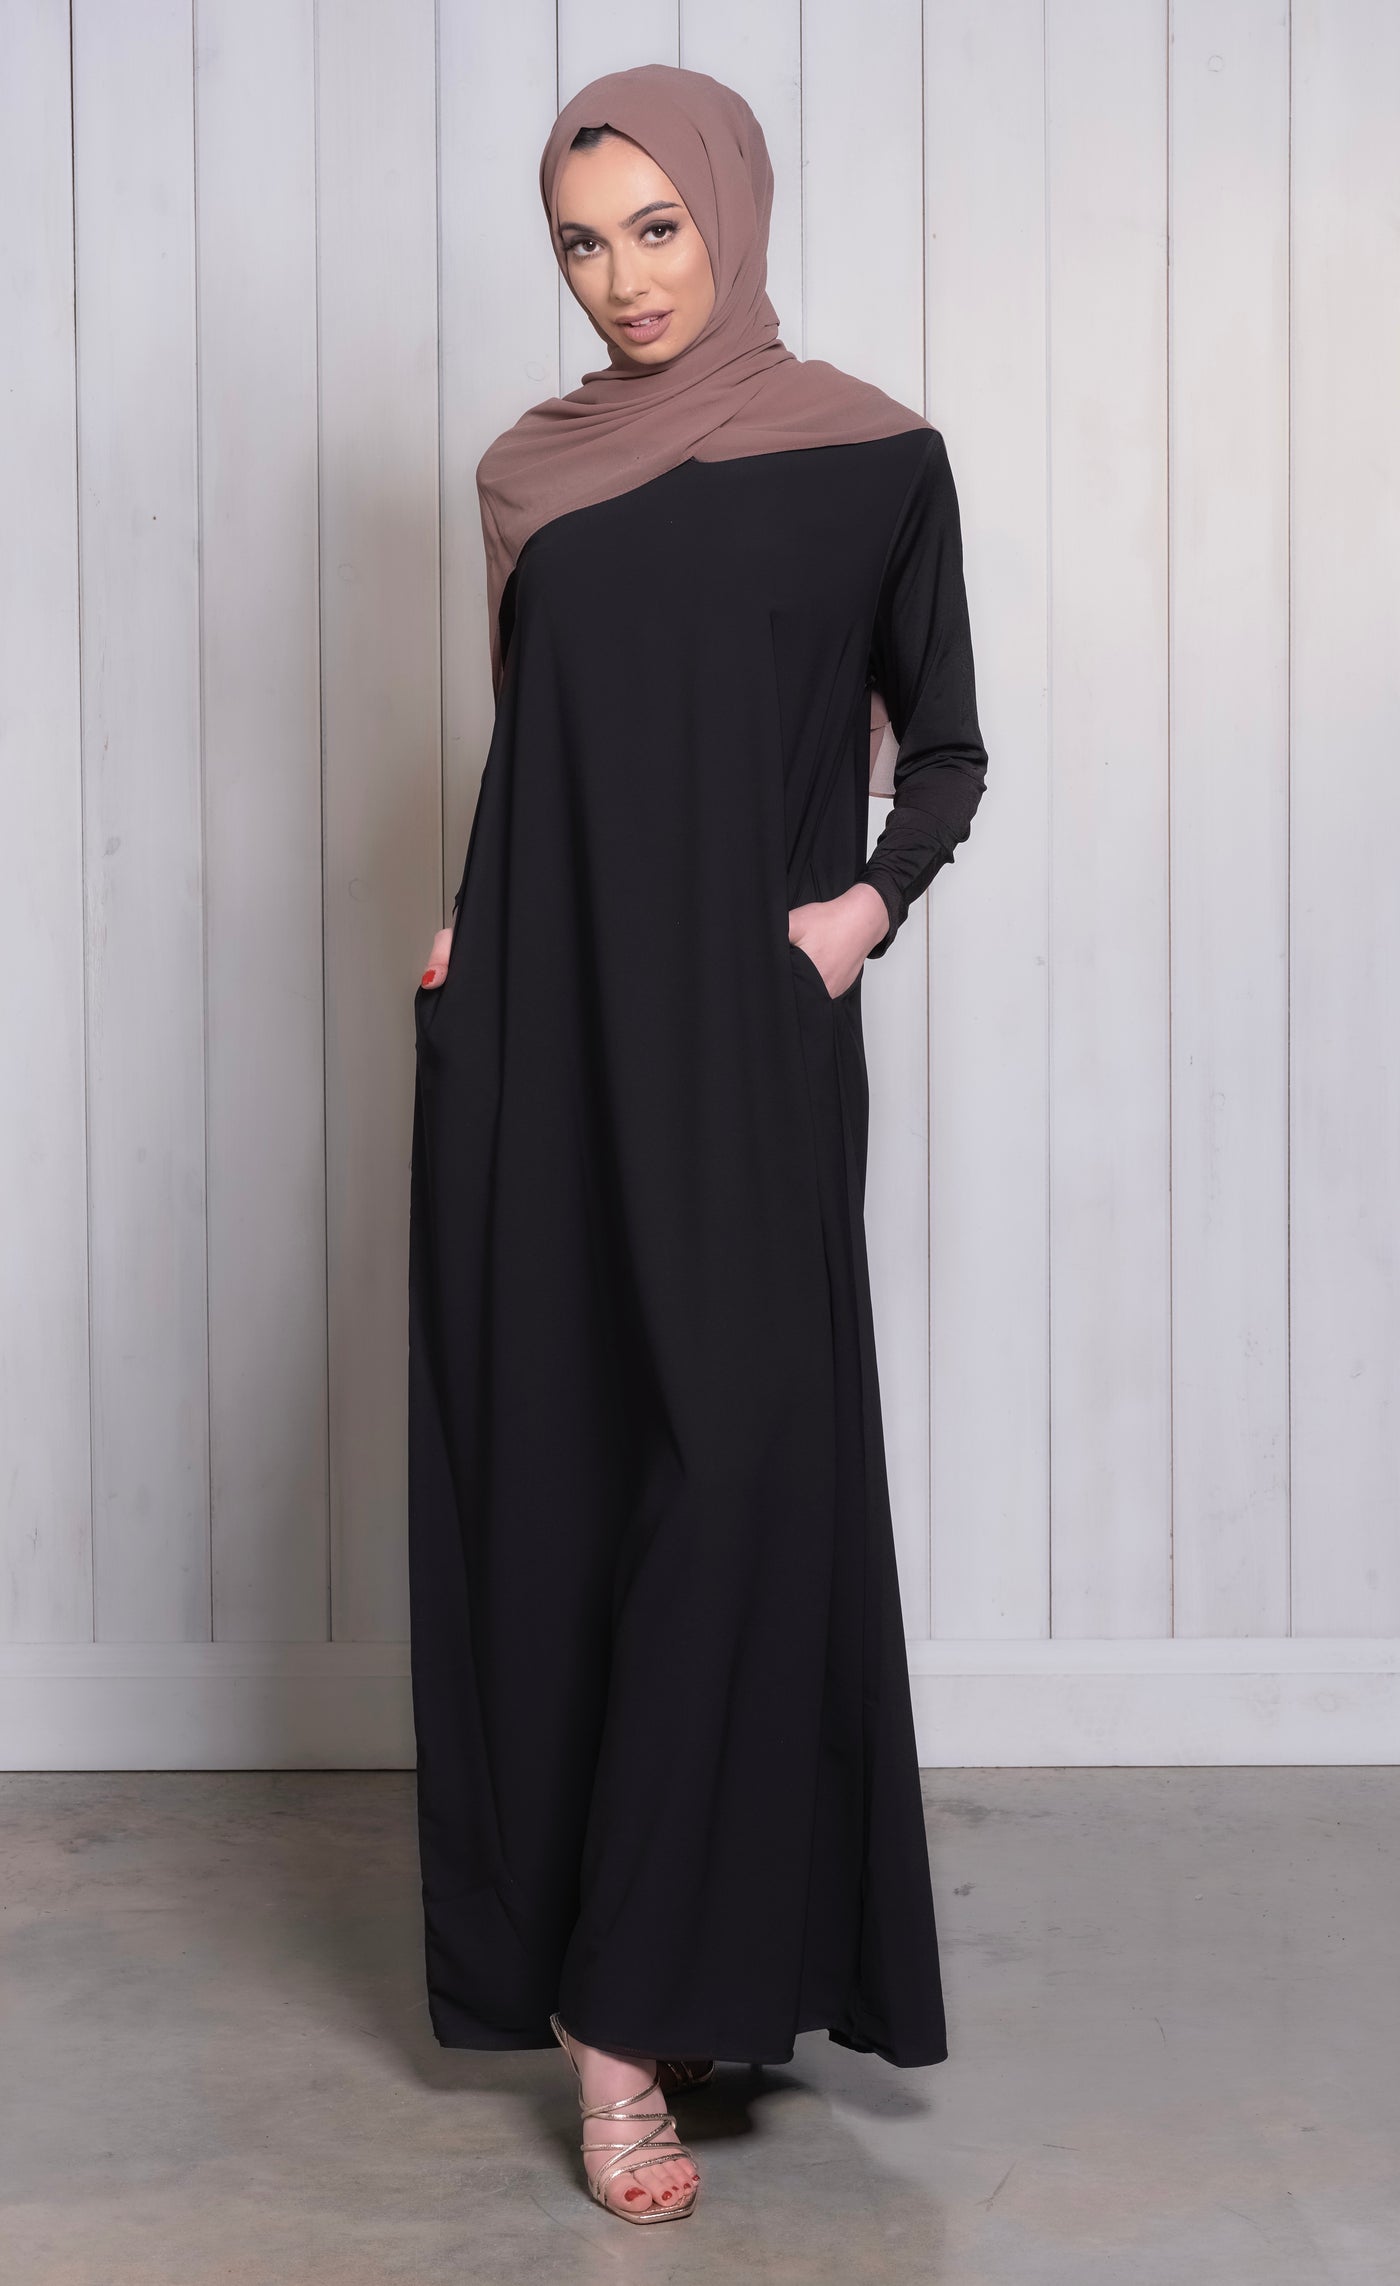 closed black abaya with pockets